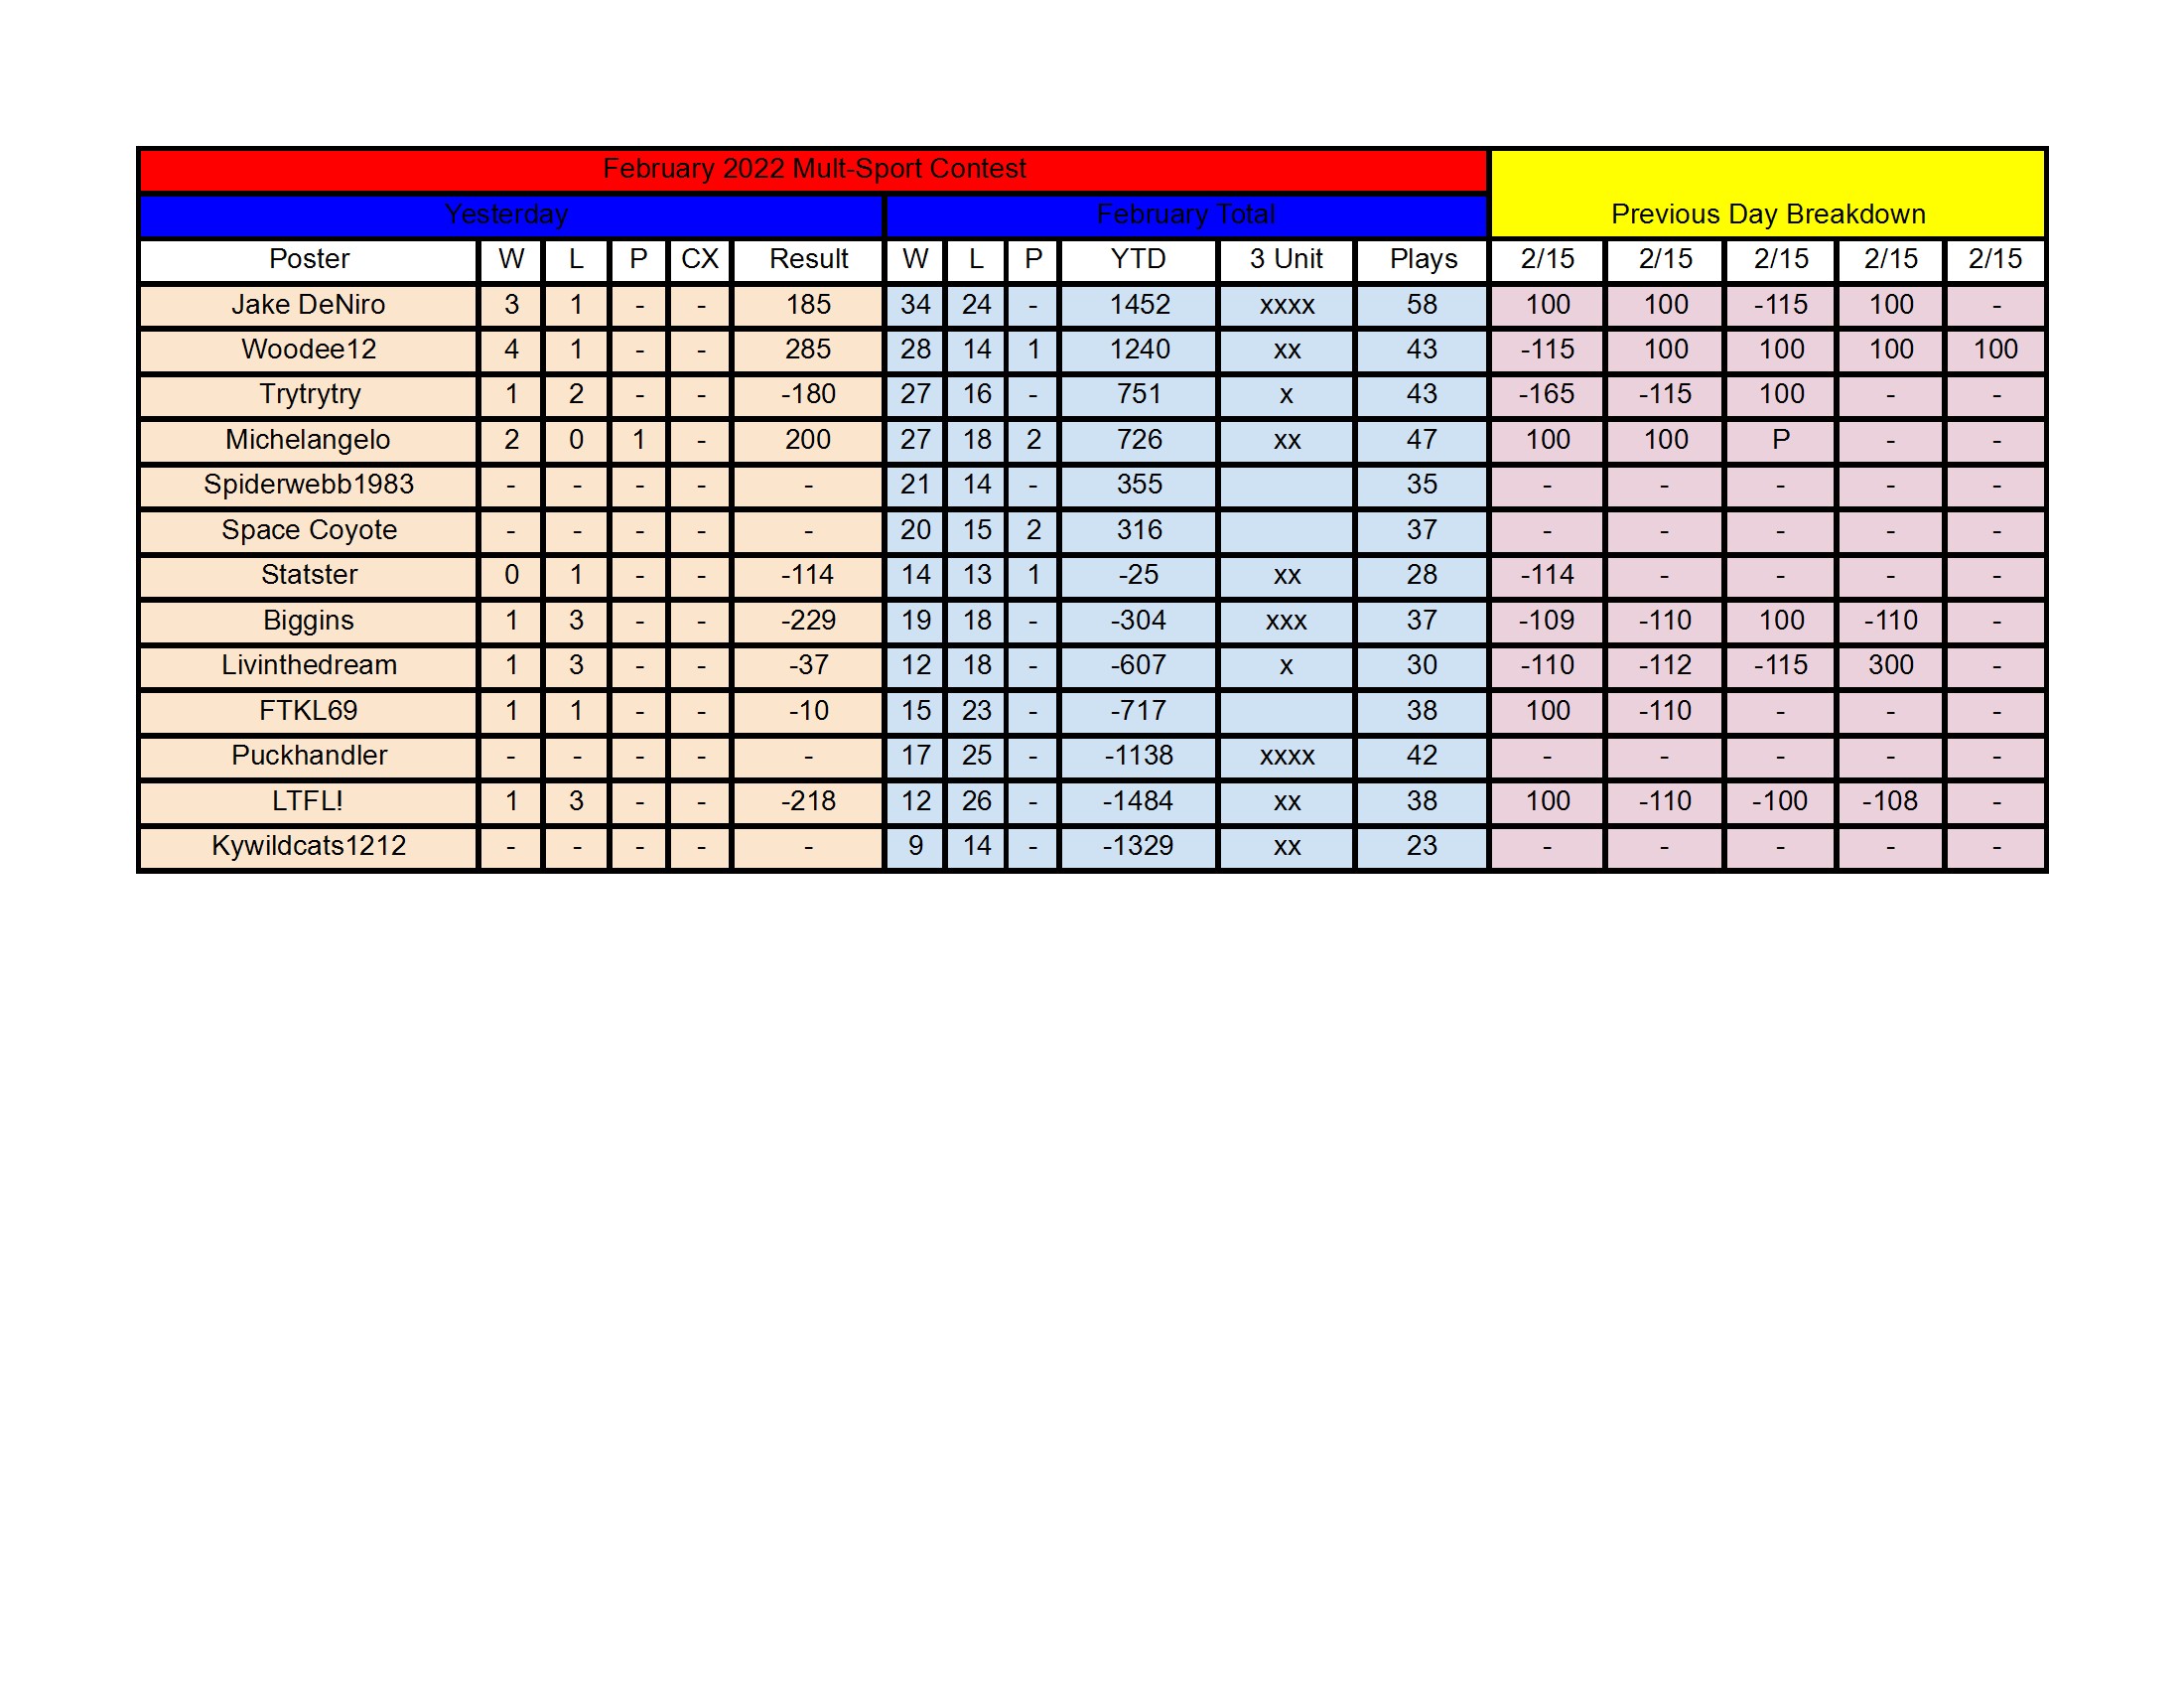 February Standings - 2_15 conv 1.jpeg